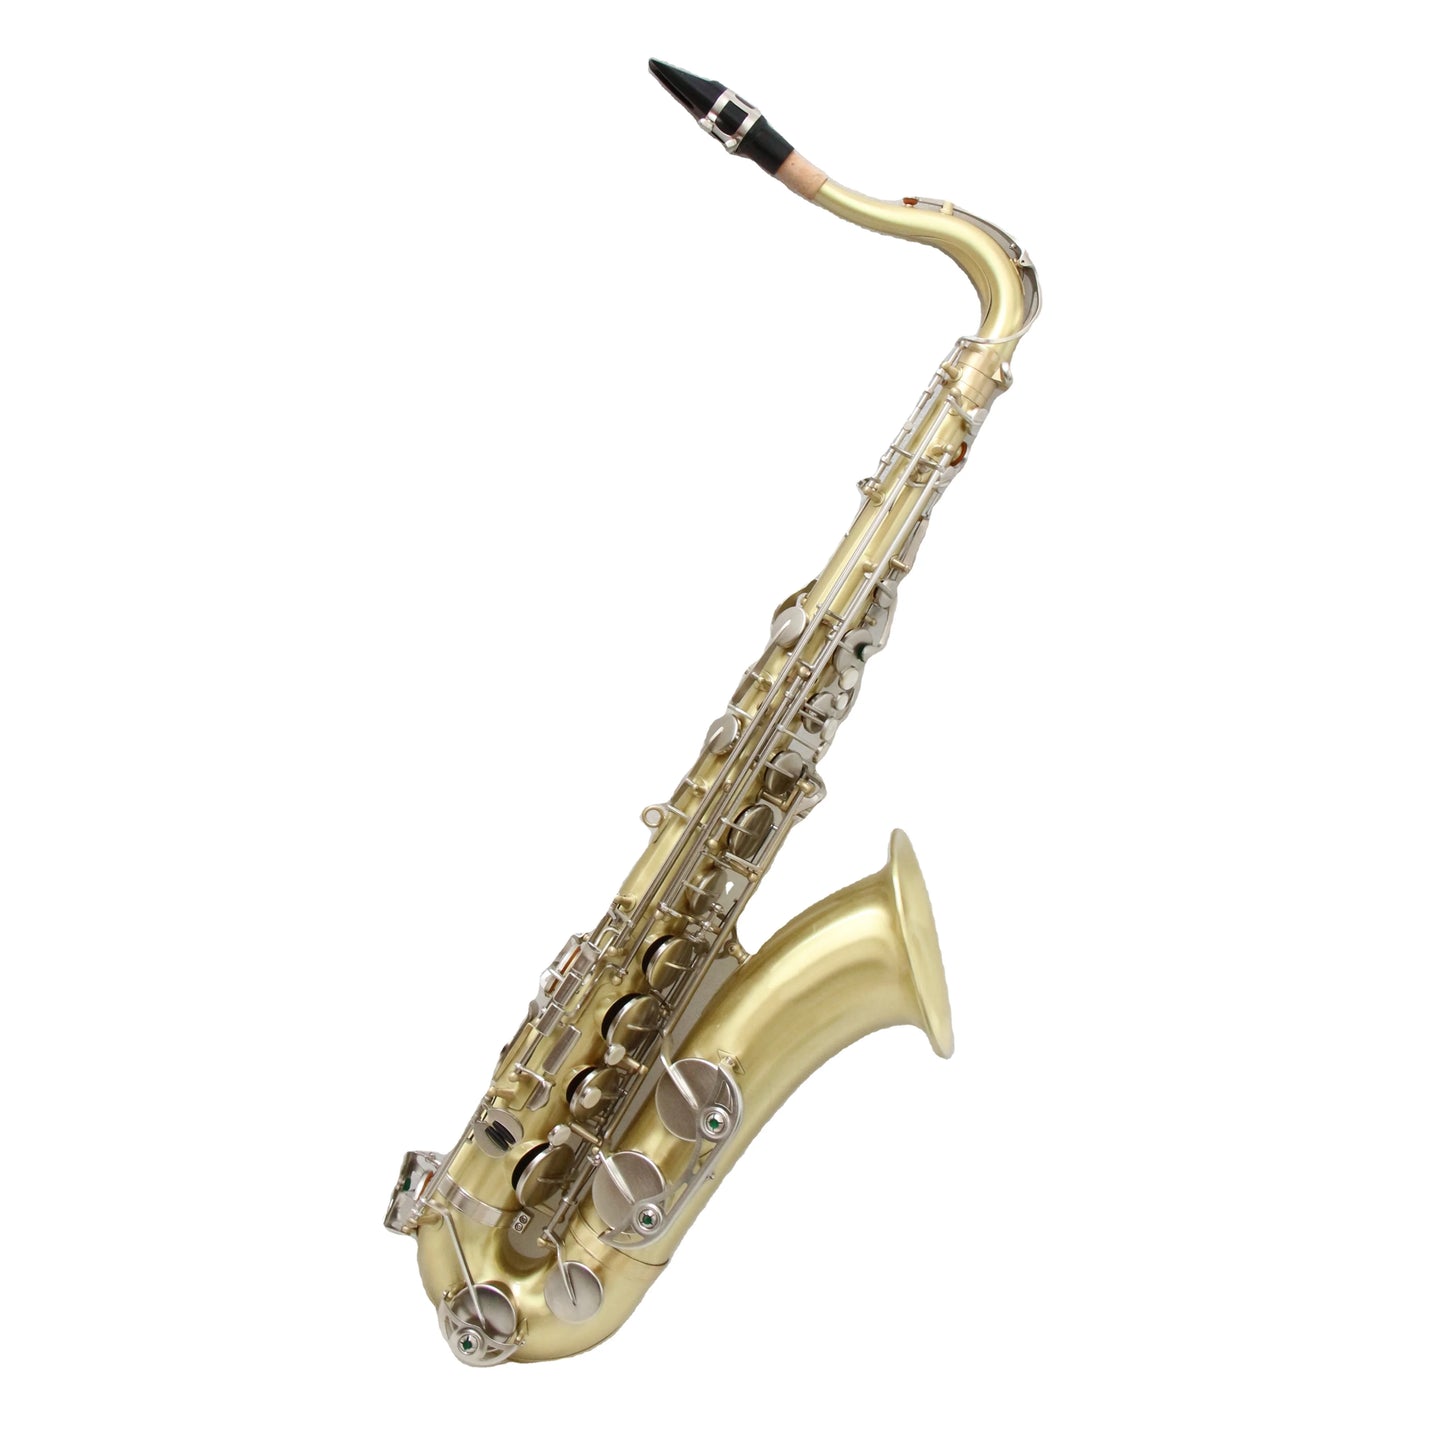 High quality saxophone tenor professional Gold Brush Body Nickel Brush Keys tenor saxophone